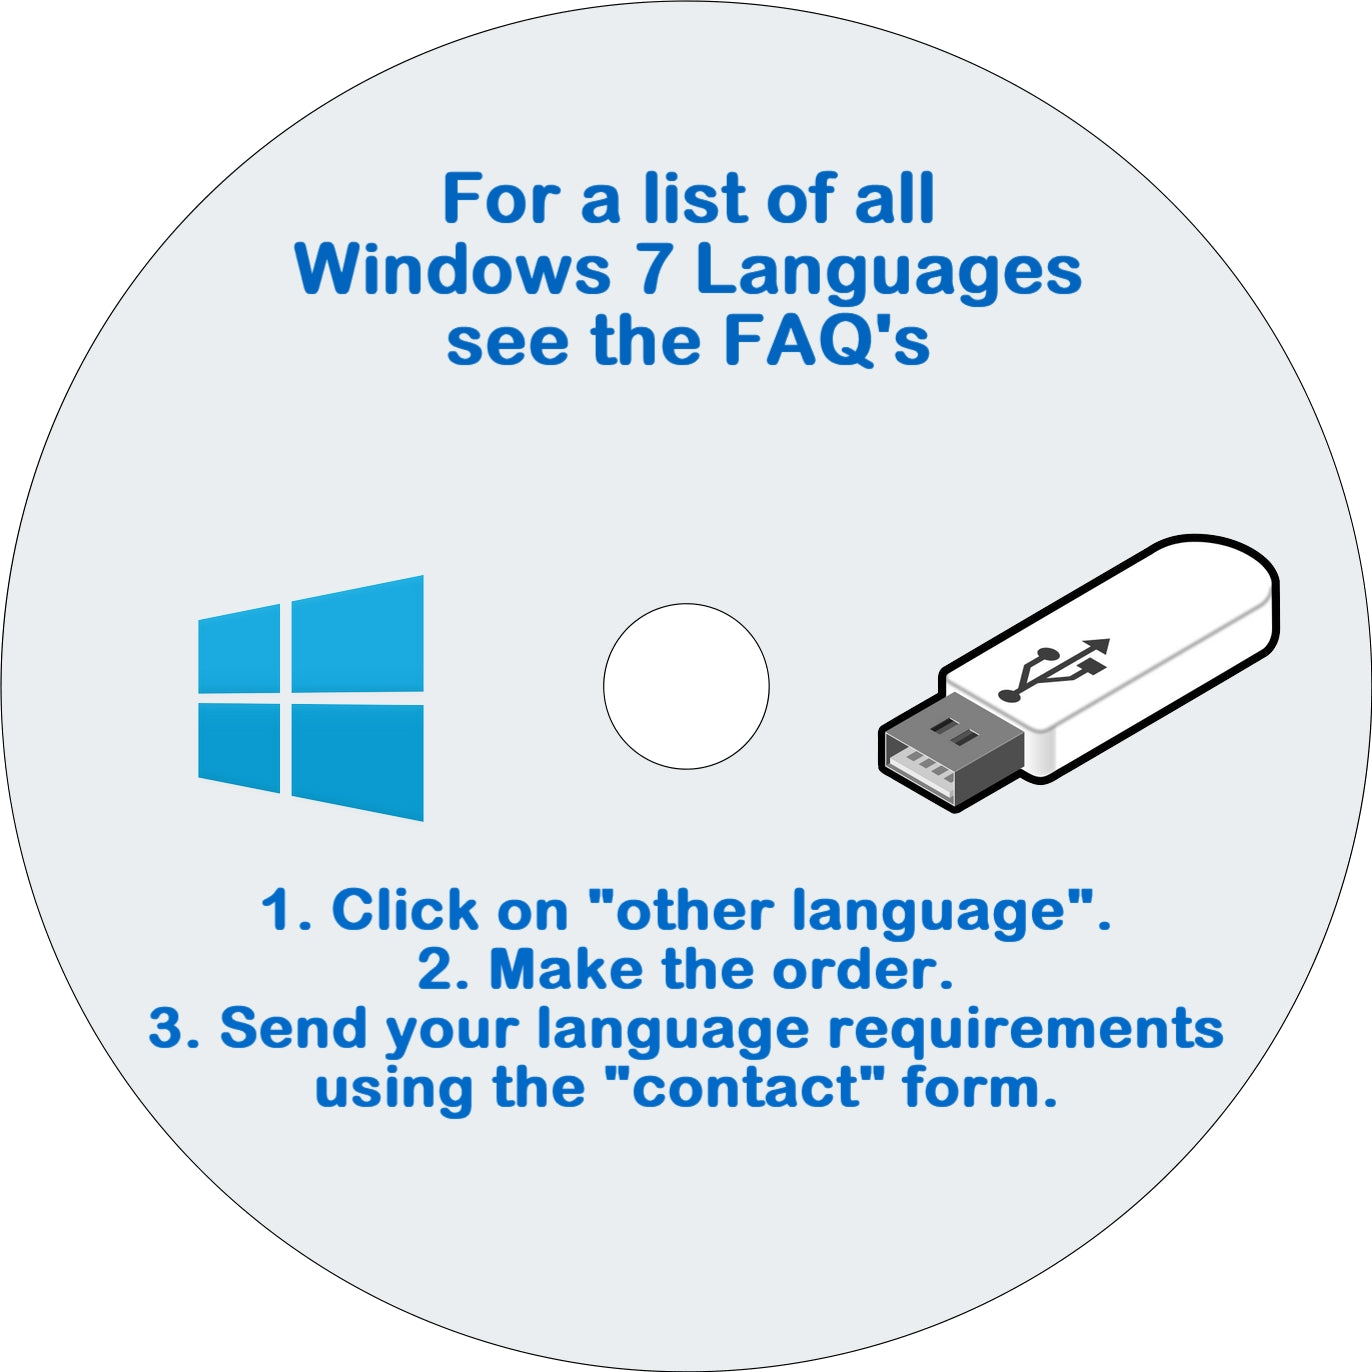 Windows 7 Enterpise USB 64 Bit